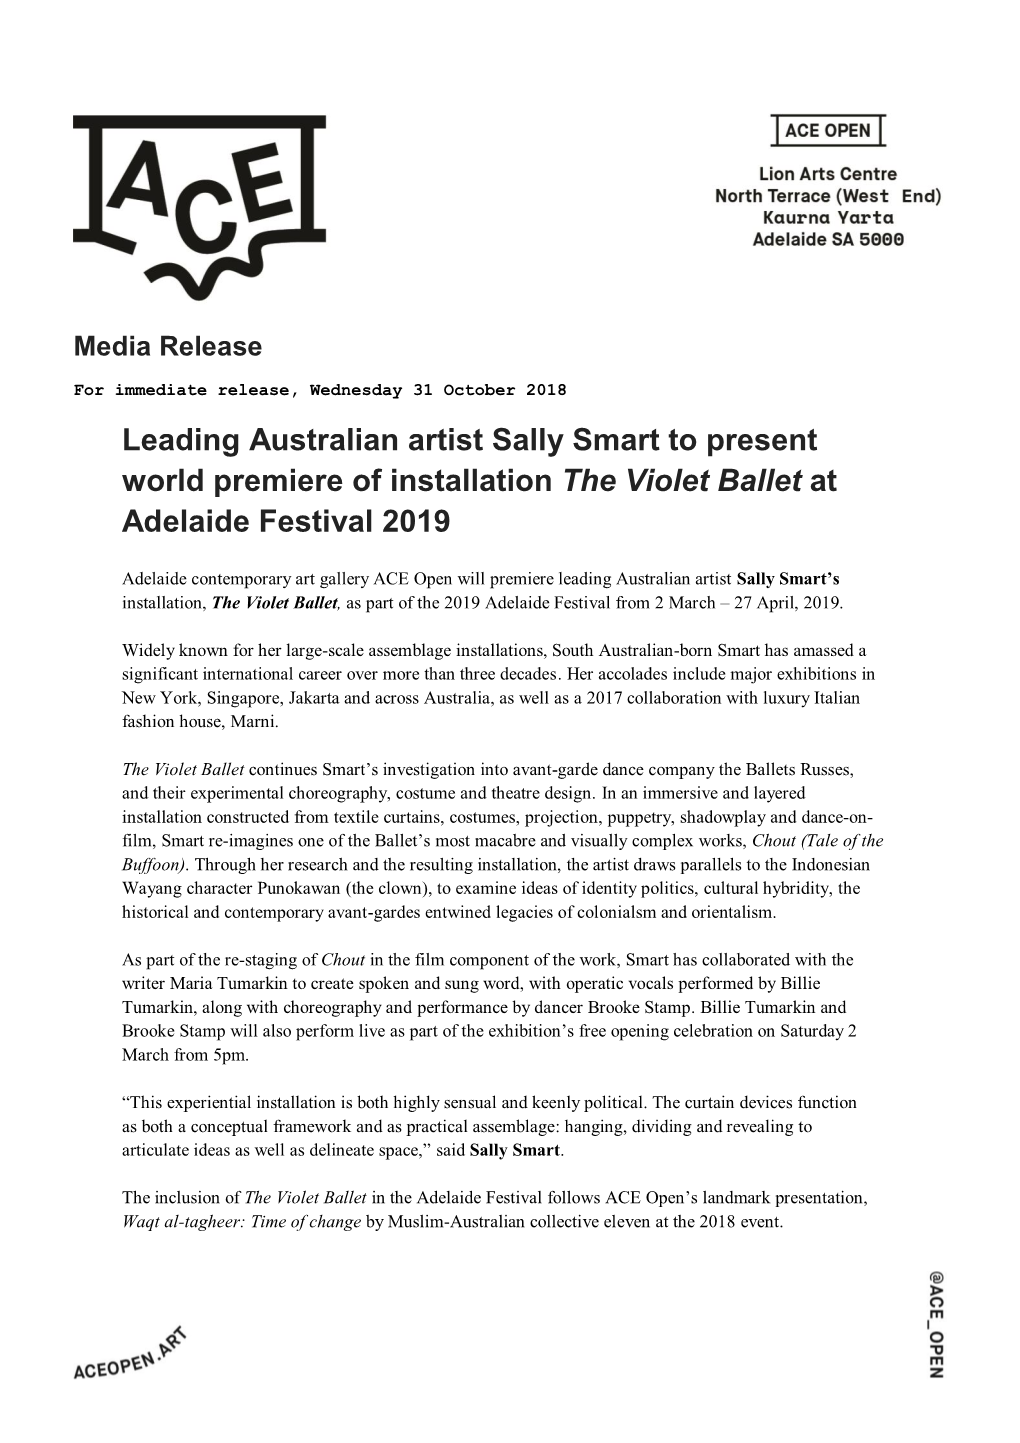 Leading Australian Artist Sally Smart to Present World Premiere of Installation the Violet Ballet at Adelaide Festival 2019